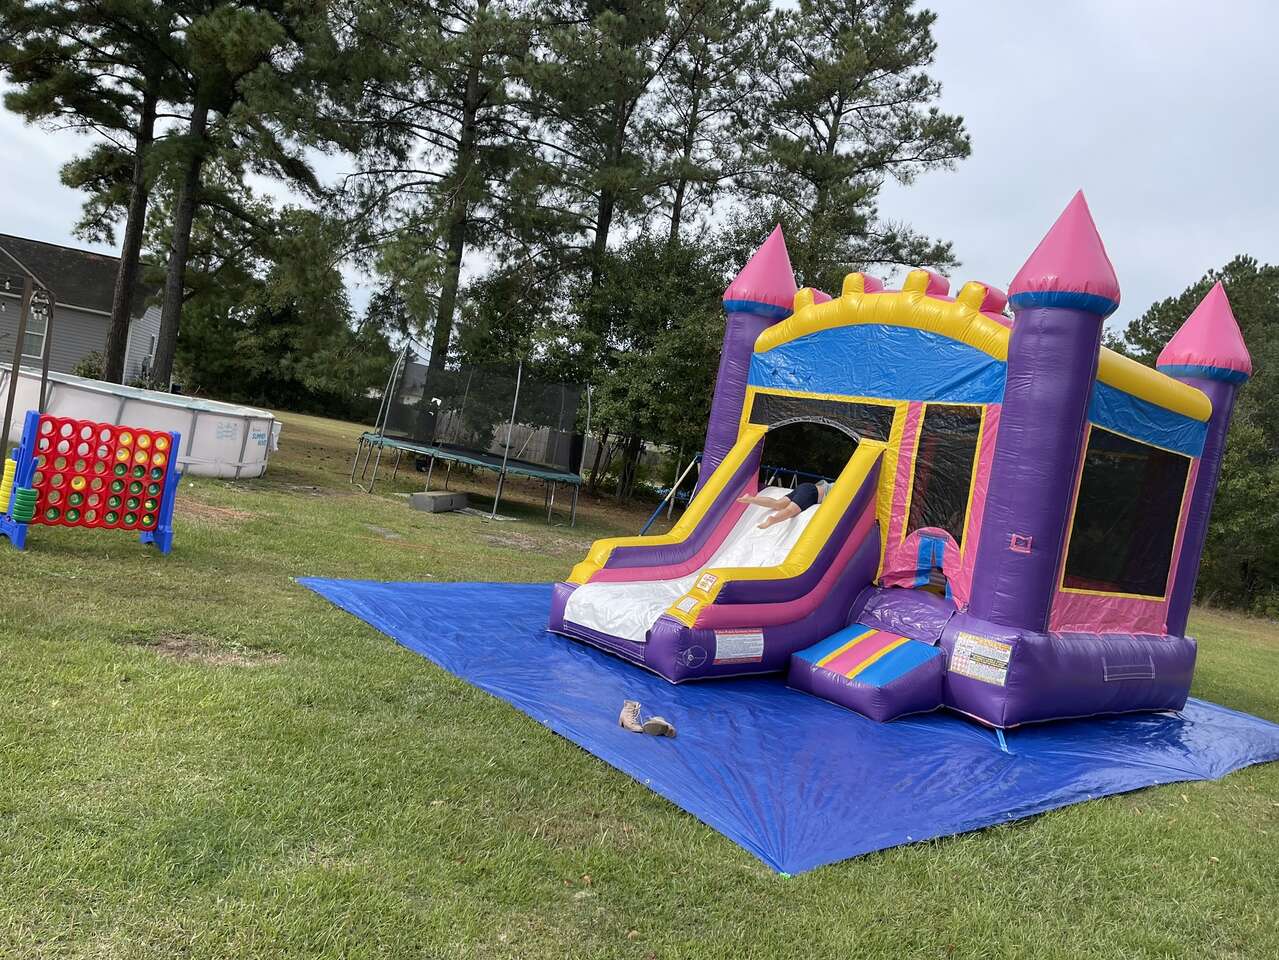 Purple Bounce house with a slide